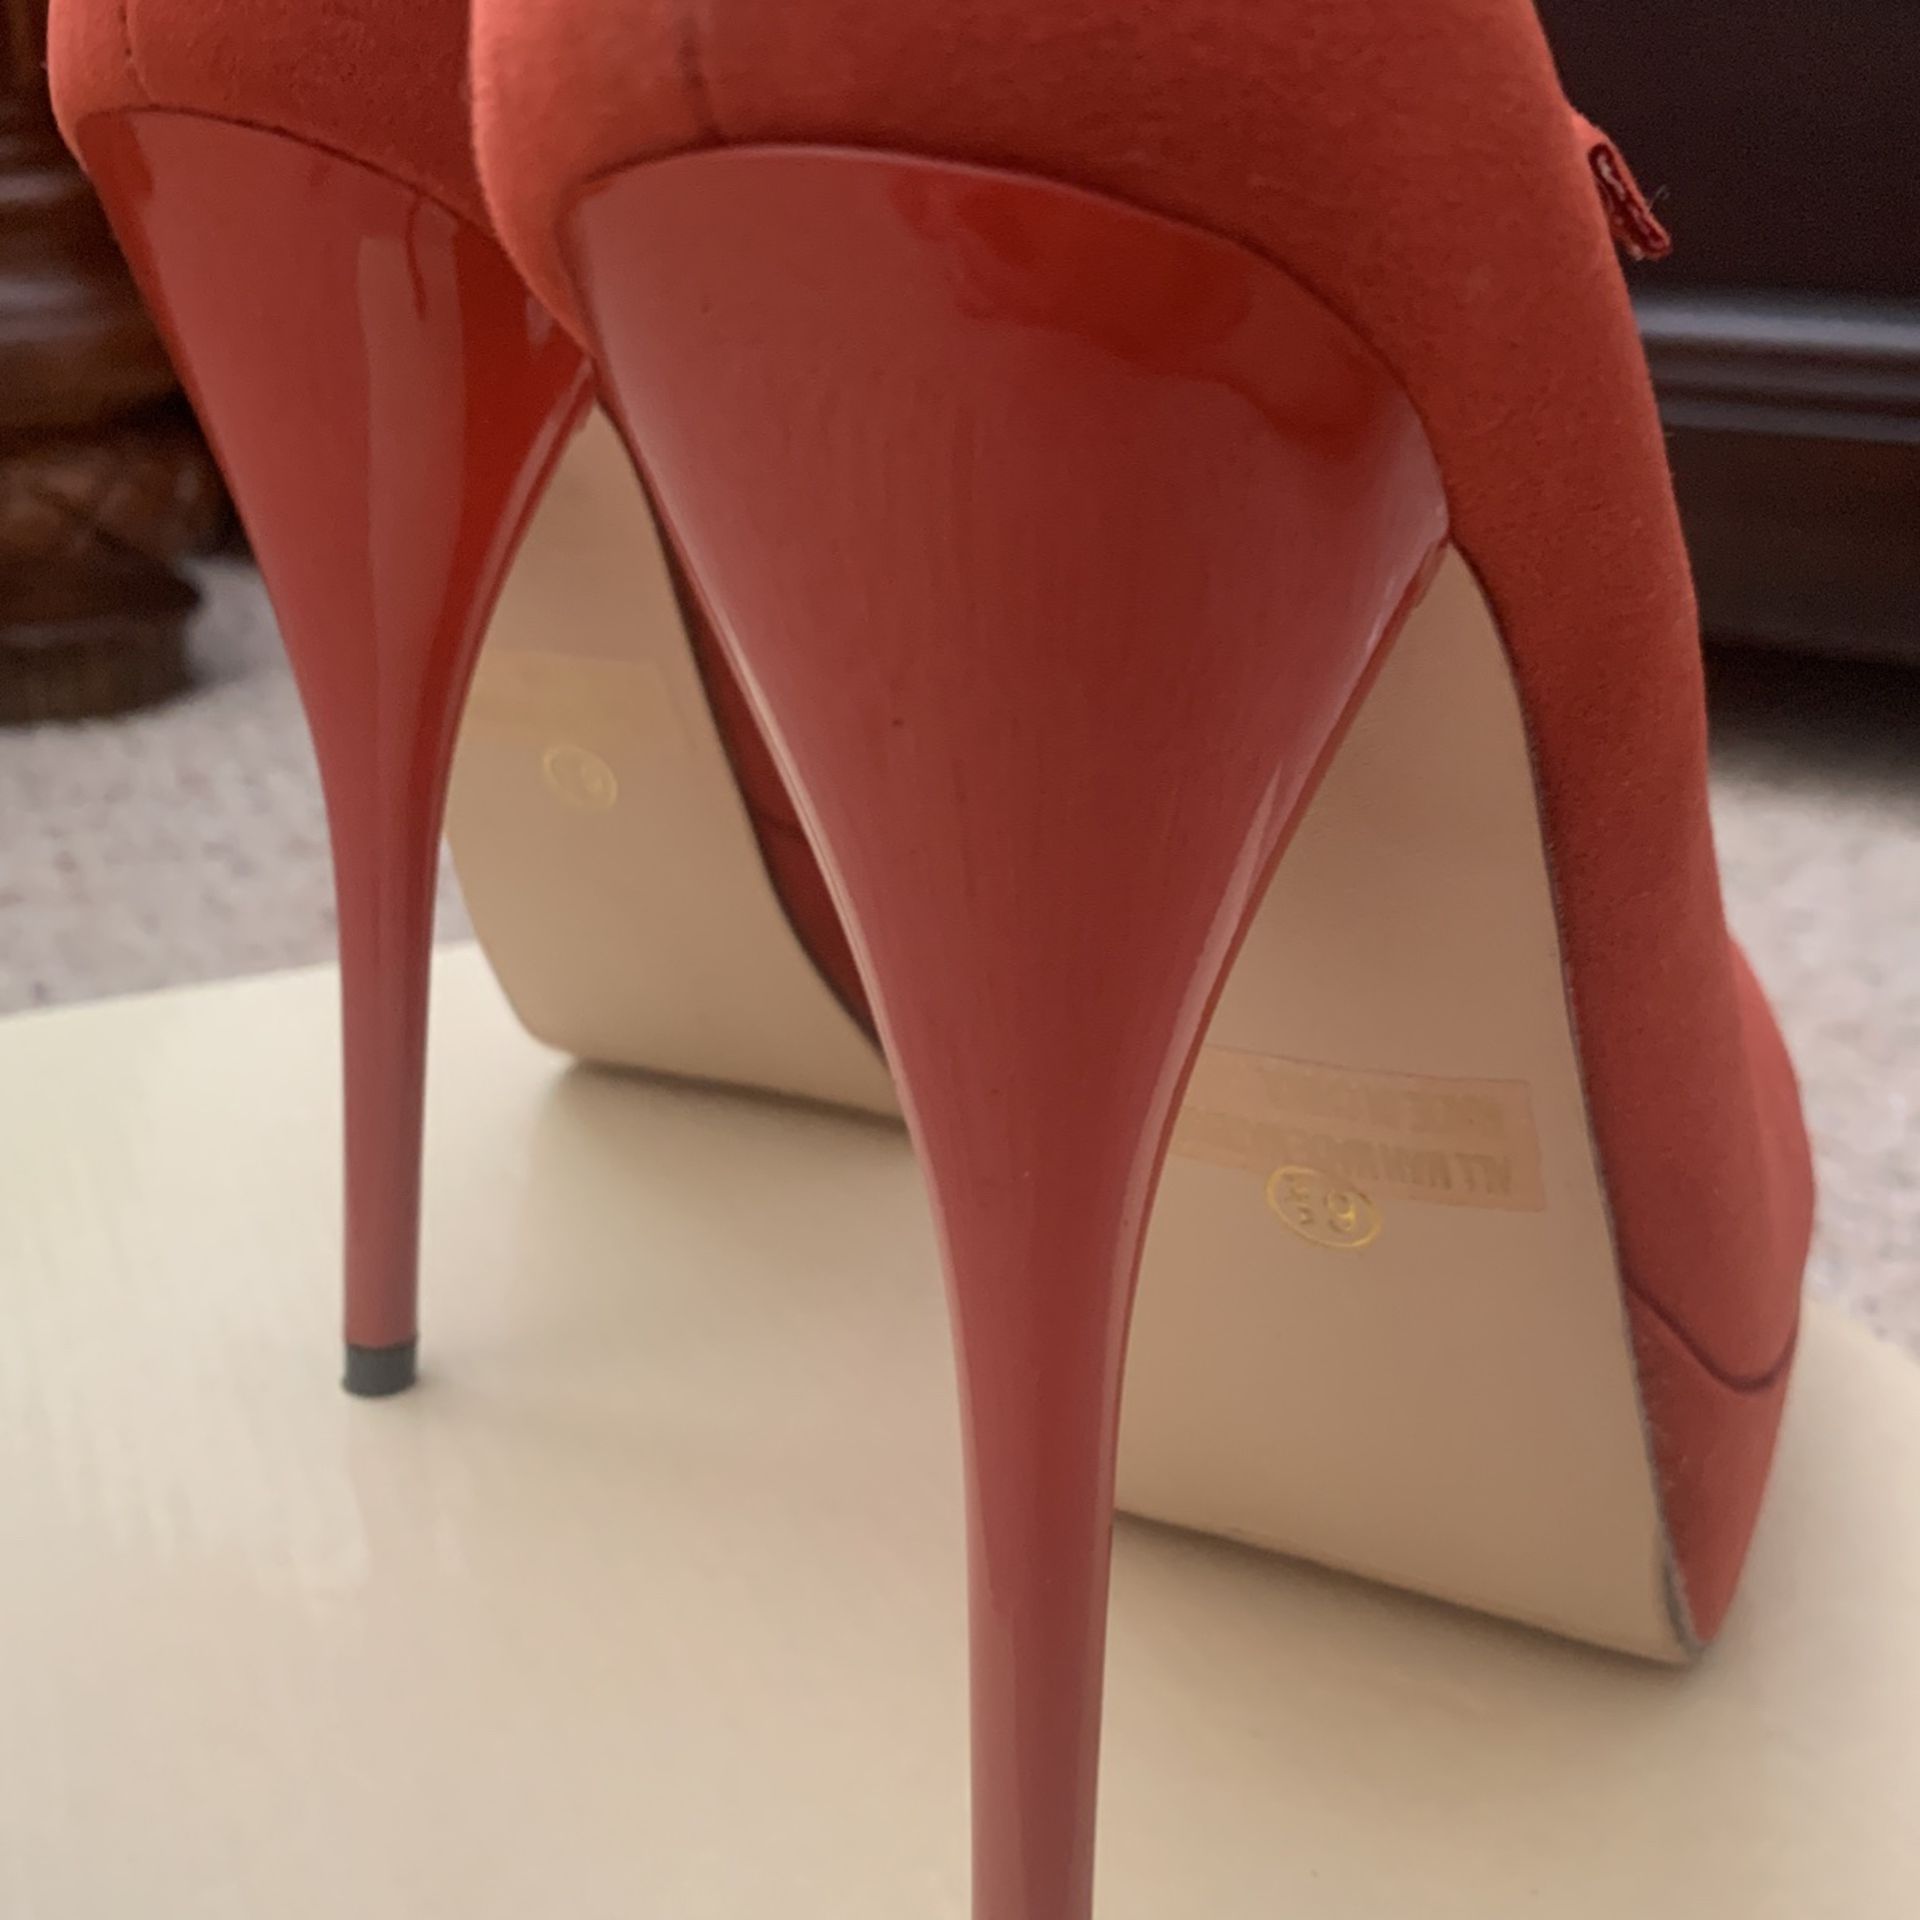 High heels - Size 6 1/2